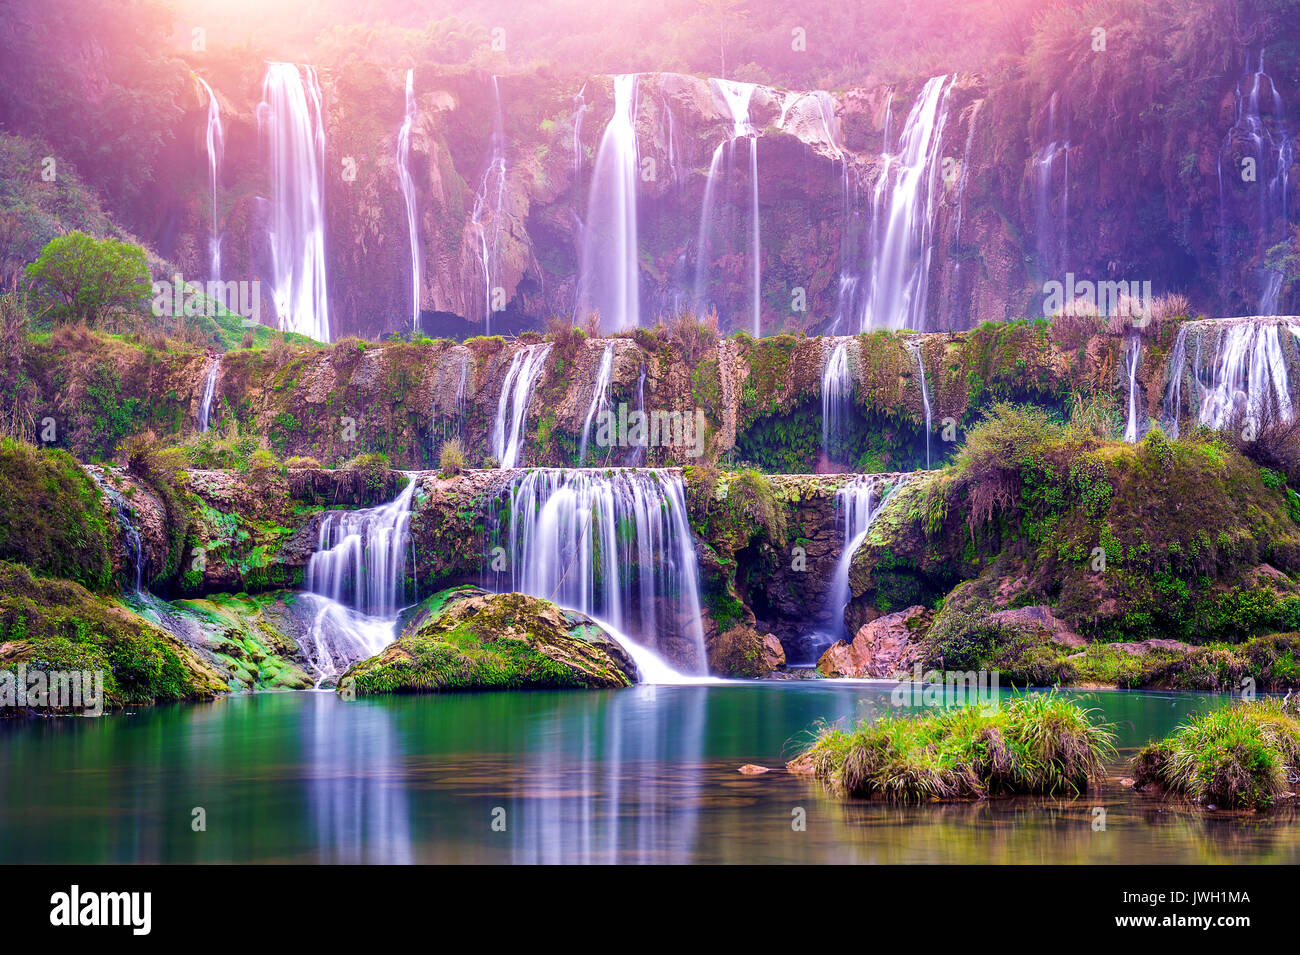 Jiulong waterfall in Luoping, China. Stock Photo